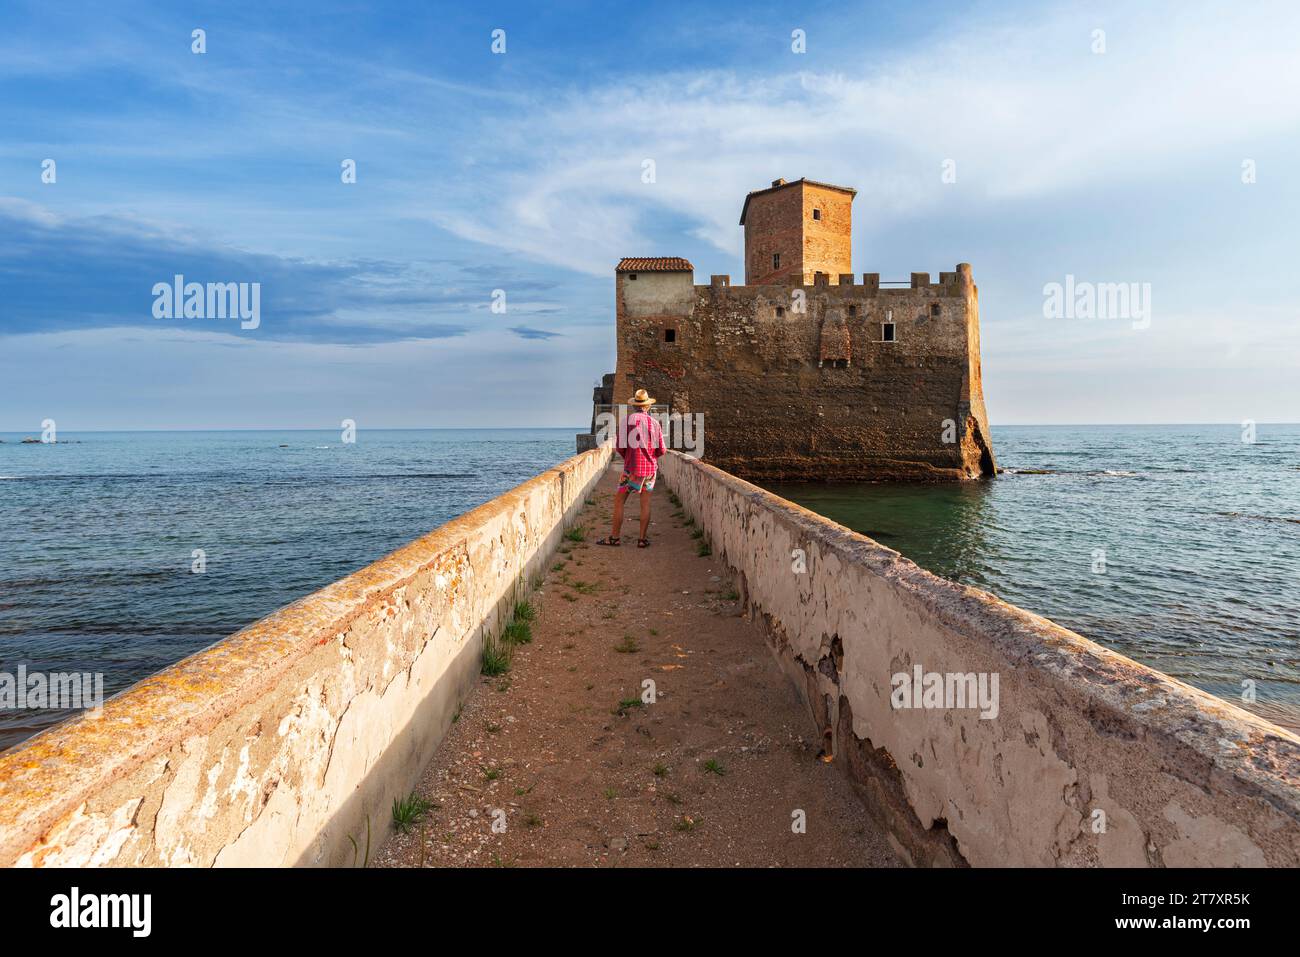 Tourist standing on top of the boardwalk admiring Torre Astura Castle, Nettuno municipality, province of Rome, Tyrrhenian sea, Latium (Lazio), Italy, Stock Photo